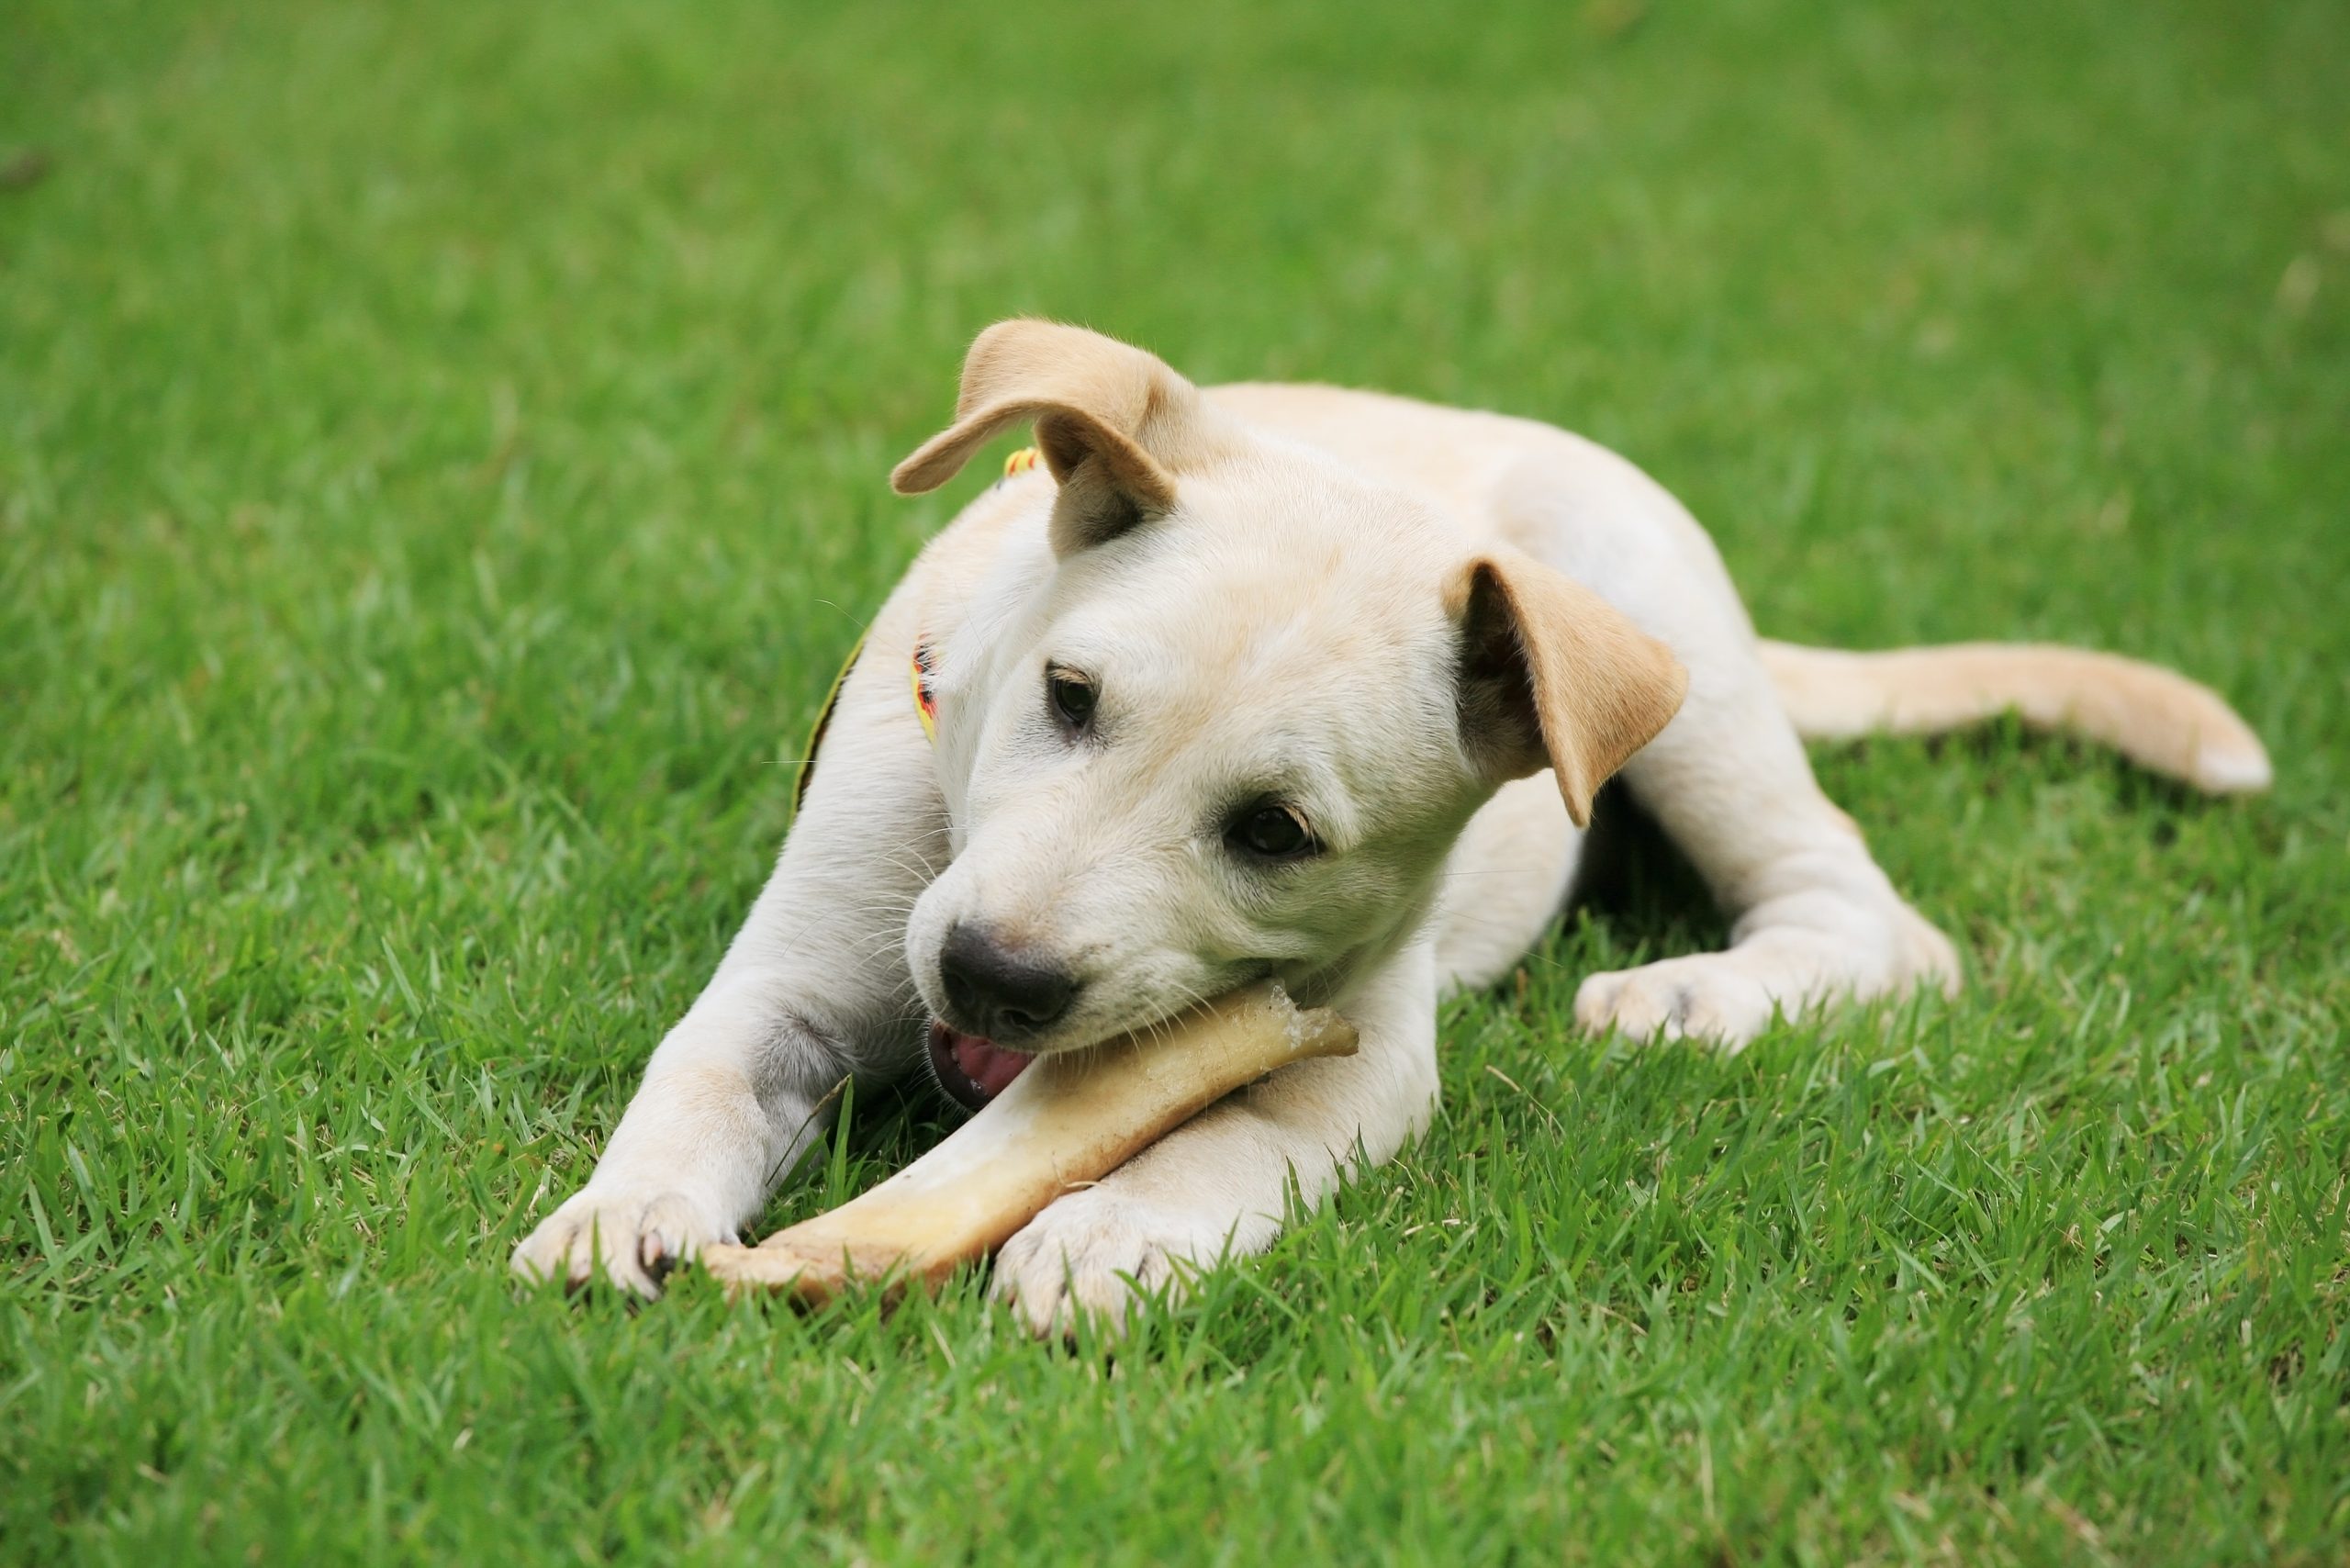 Cute Labrador Retriever puppy eating big bone on the grass field